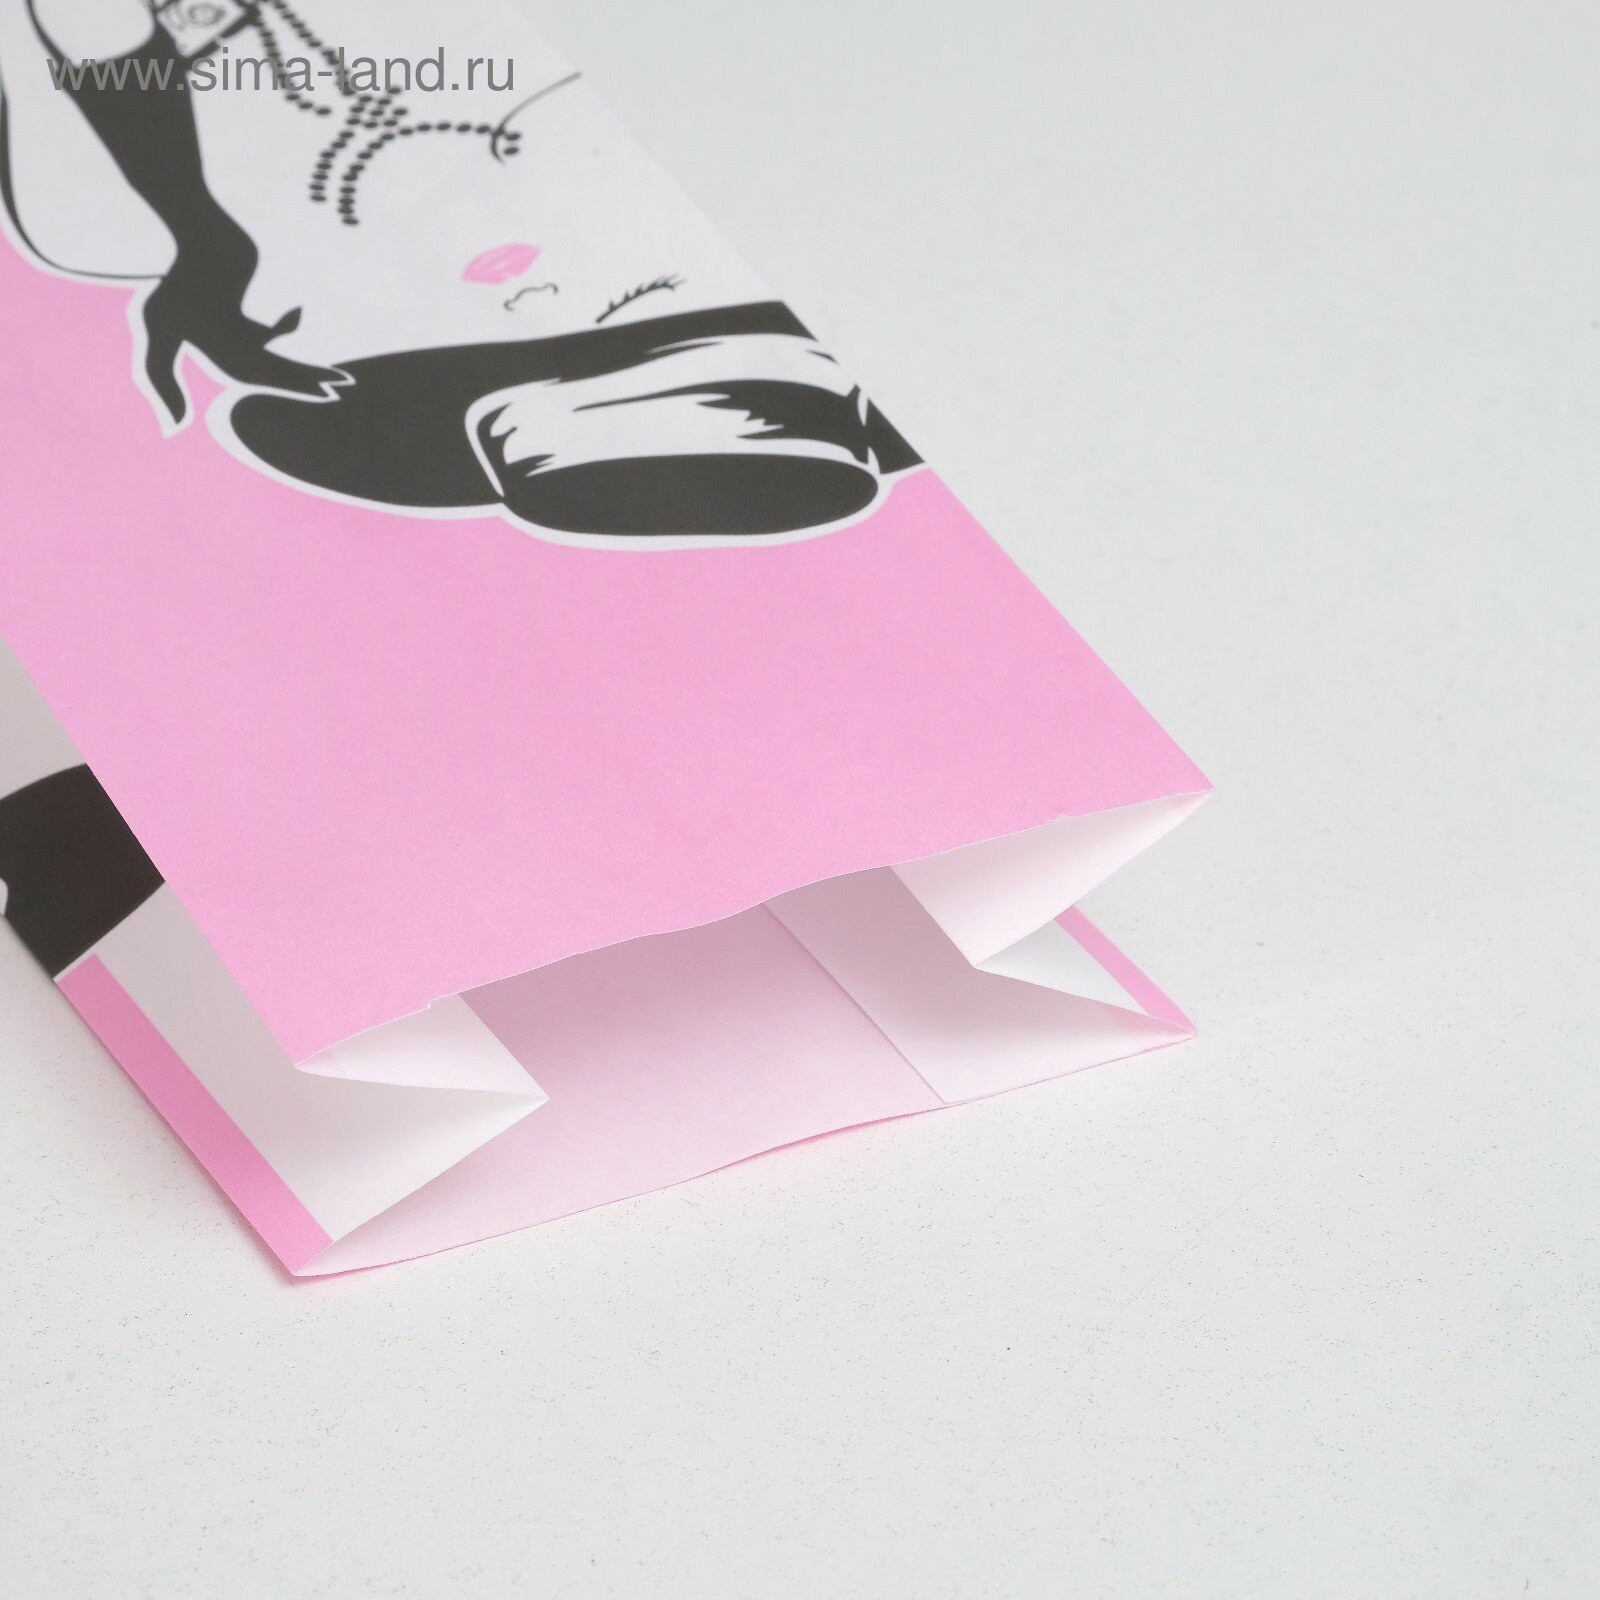 Пакет однослойный "Леди", крафт, розовый, 100 х 60 х 260 мм - фотография № 3